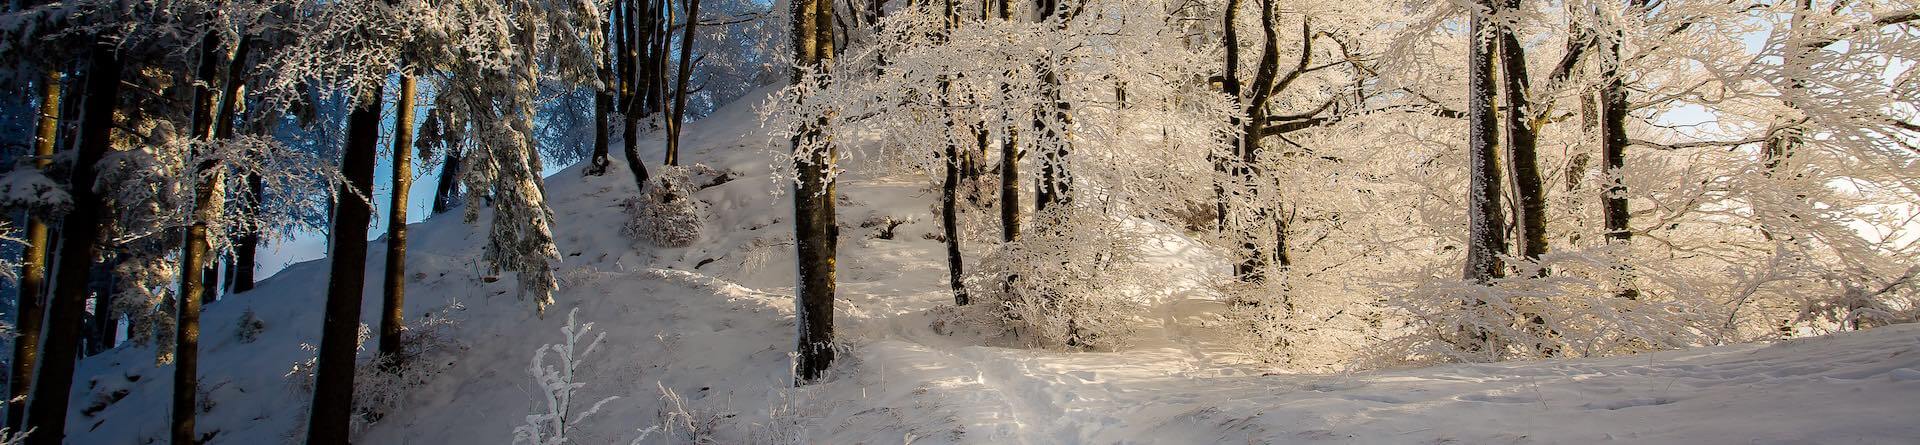 Naturpark Thal Winterwanderung im Jura